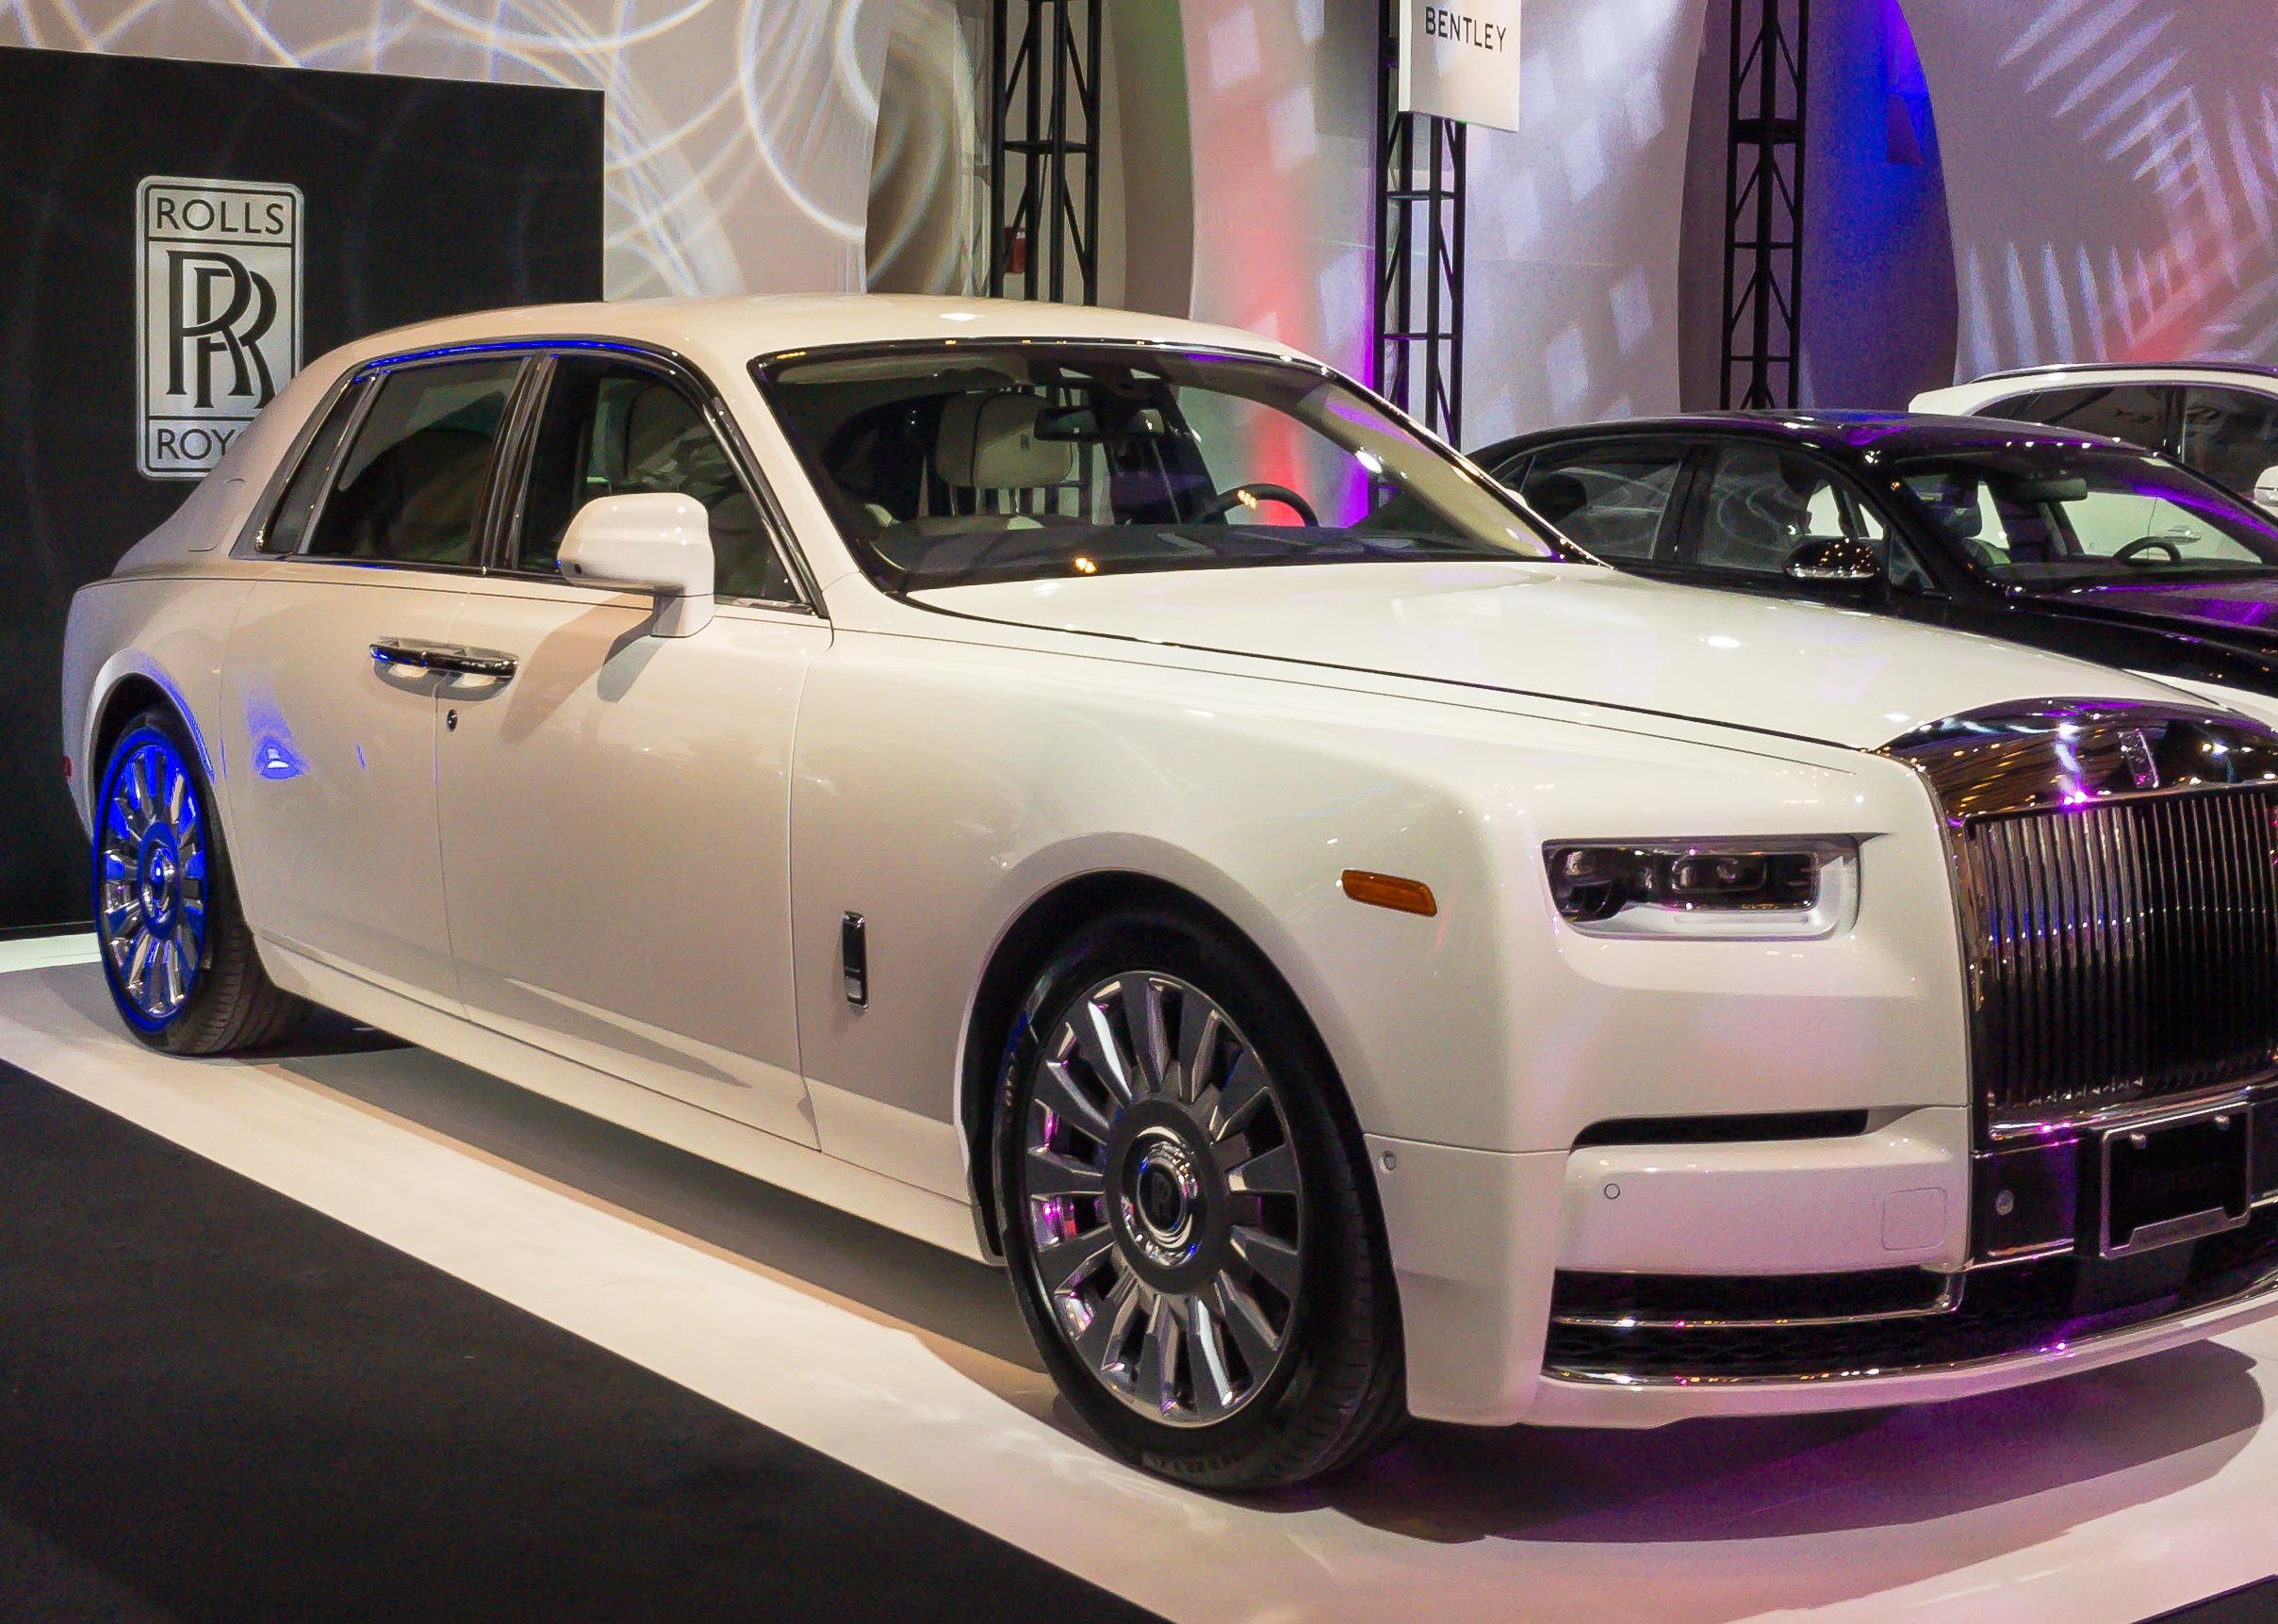 A white Rolls Royce Phantom on a showroom floor.